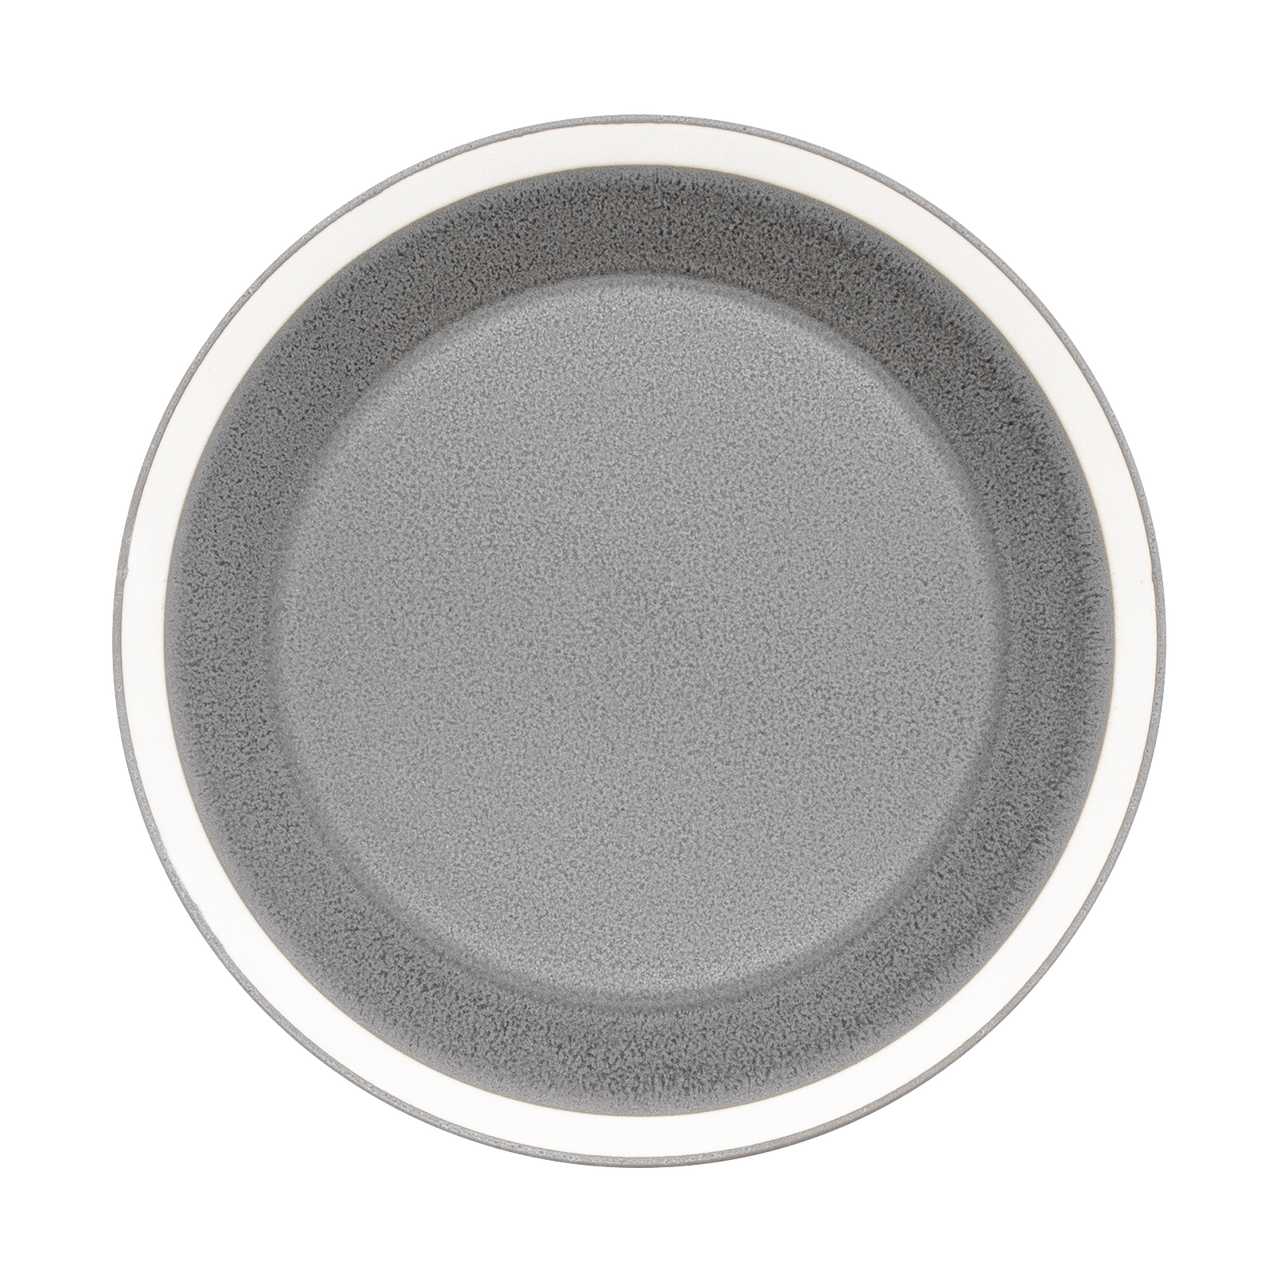 yumiko iihoshi porcelain（ユミコイイホシポーセリン）×木村硝子店 dishes 200 plate (moss gray) /matte プレート 皿 20cm 日本製 255640